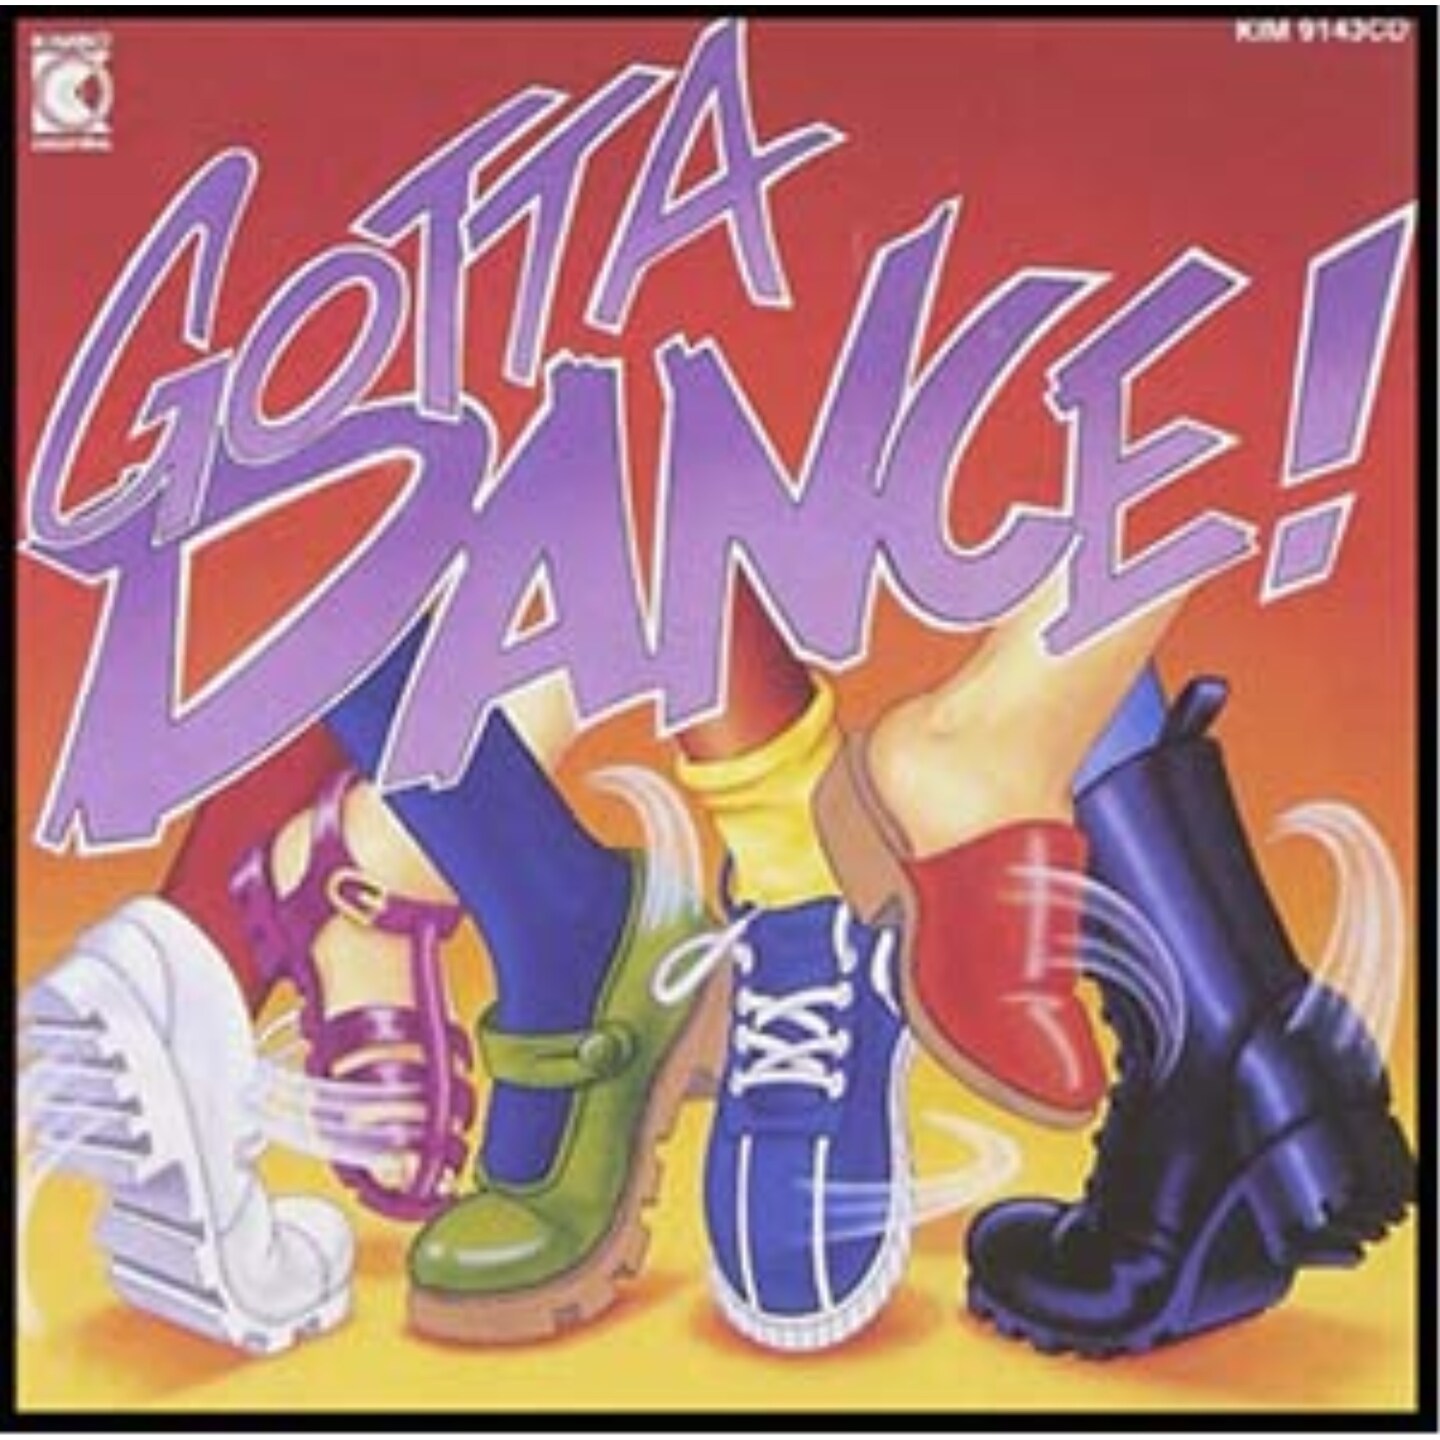 Gotta Dance Educational CD